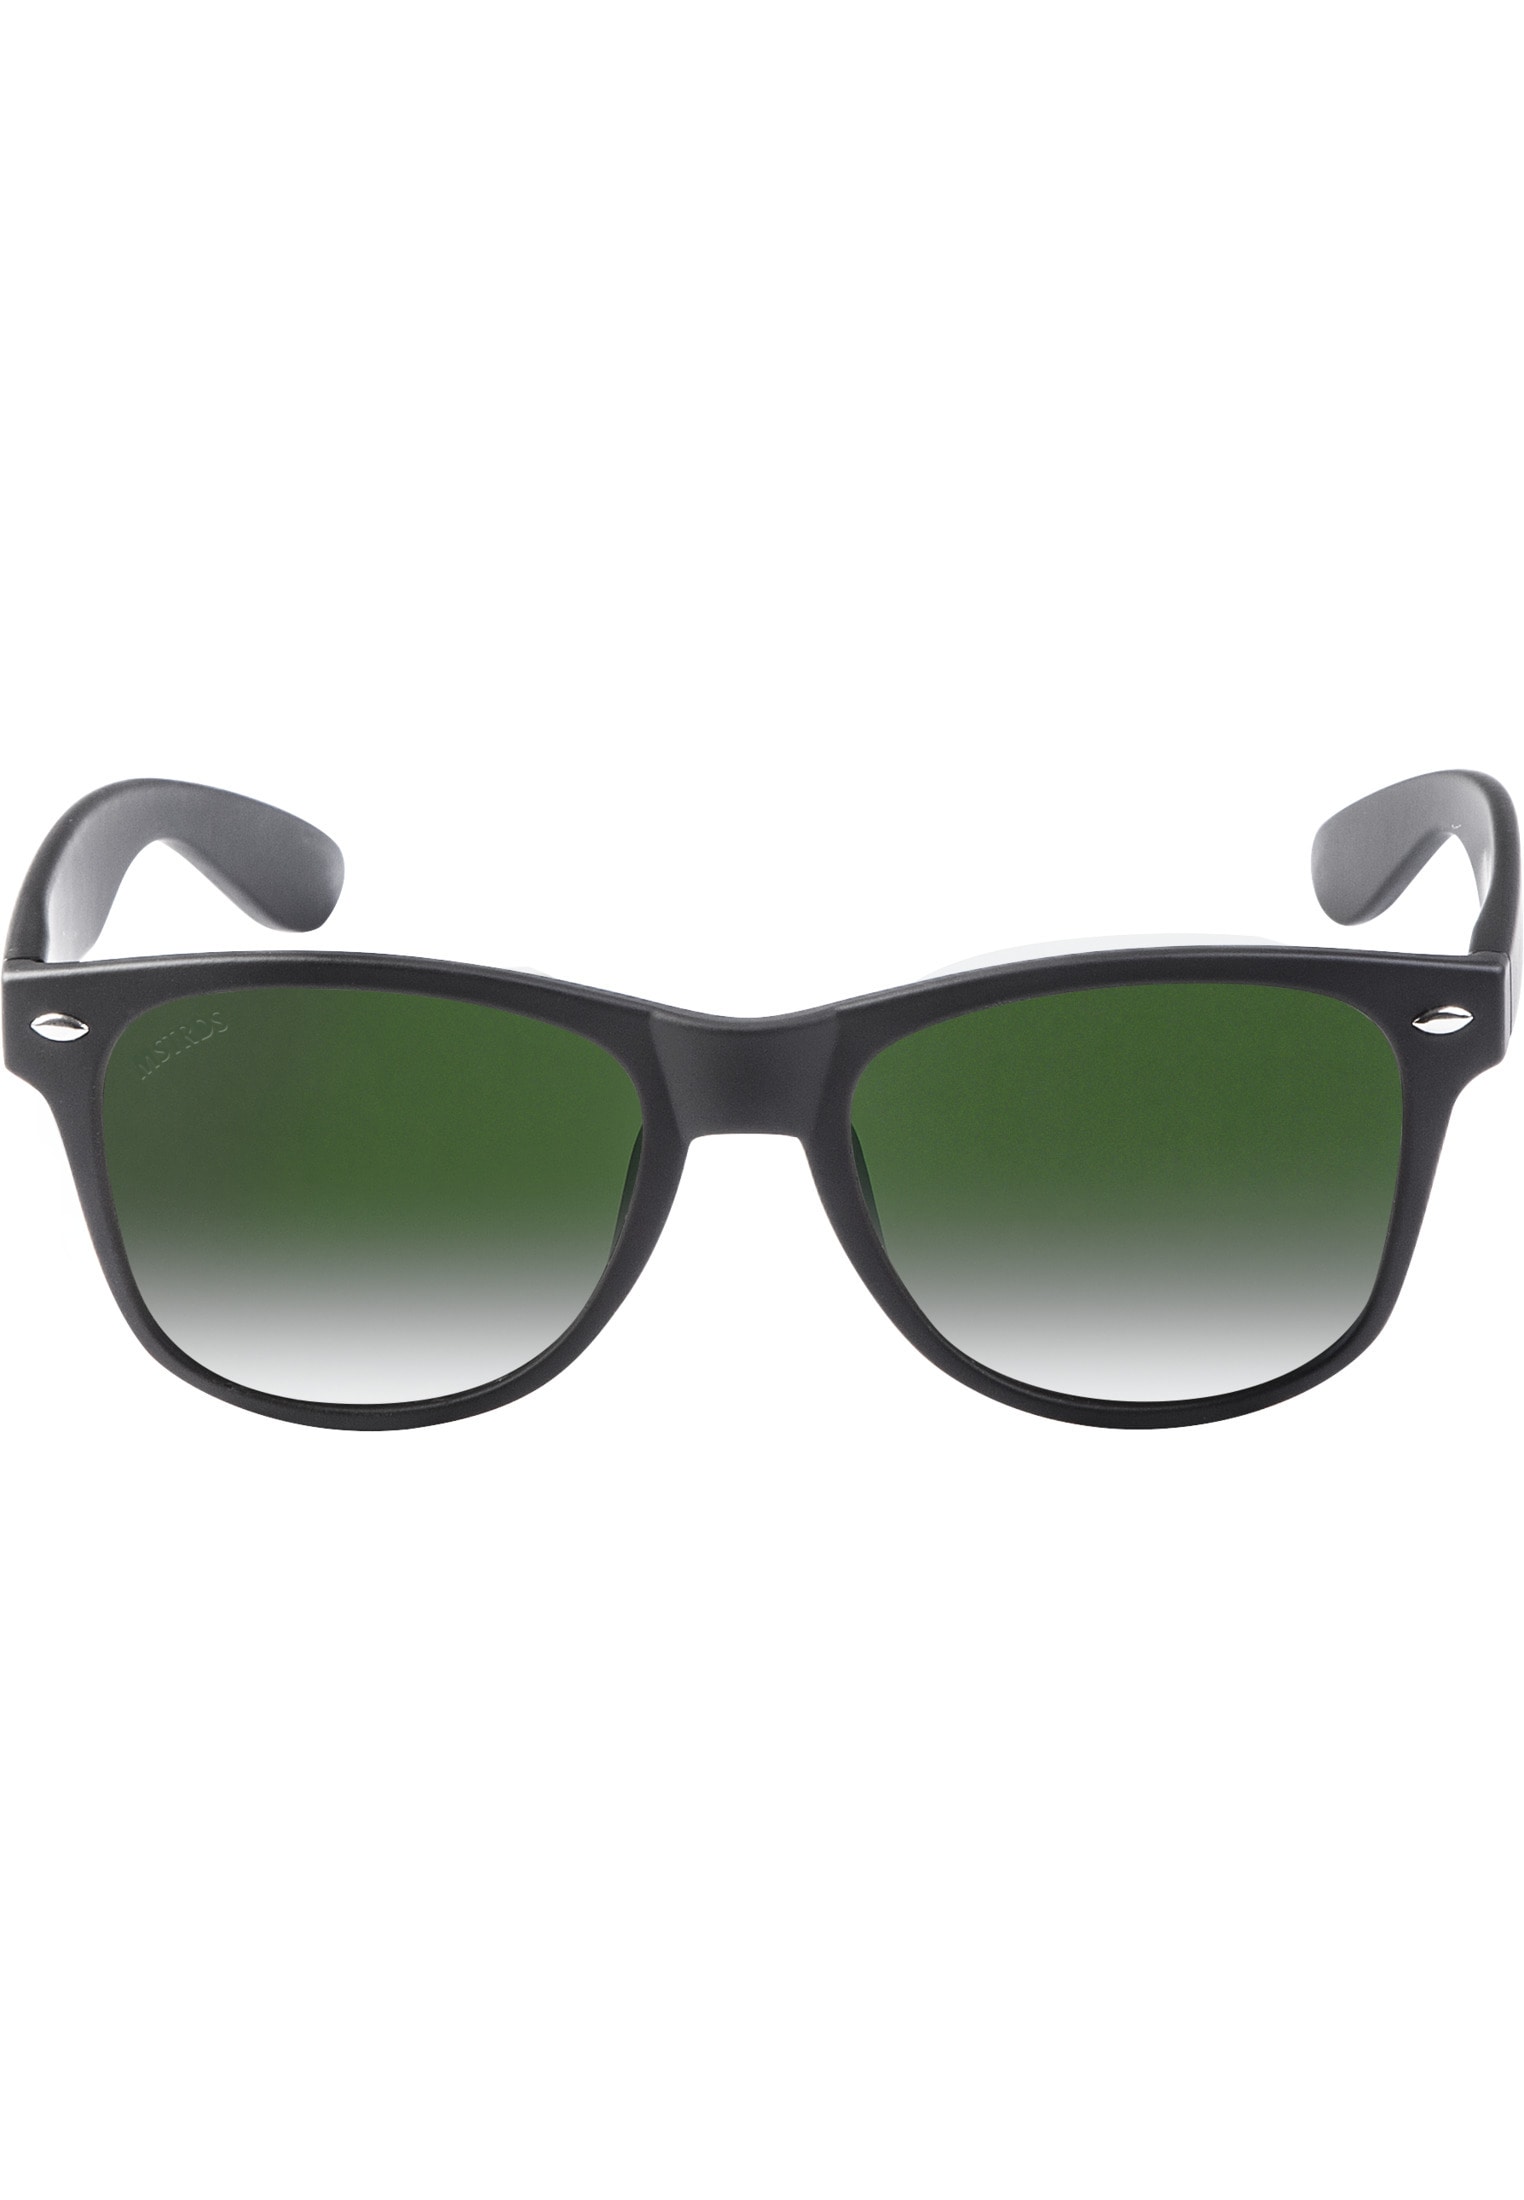 MSTRDS Sonnenbrille »Accessoires kaufen online Likoma I\'m | Youth« walking Sunglasses